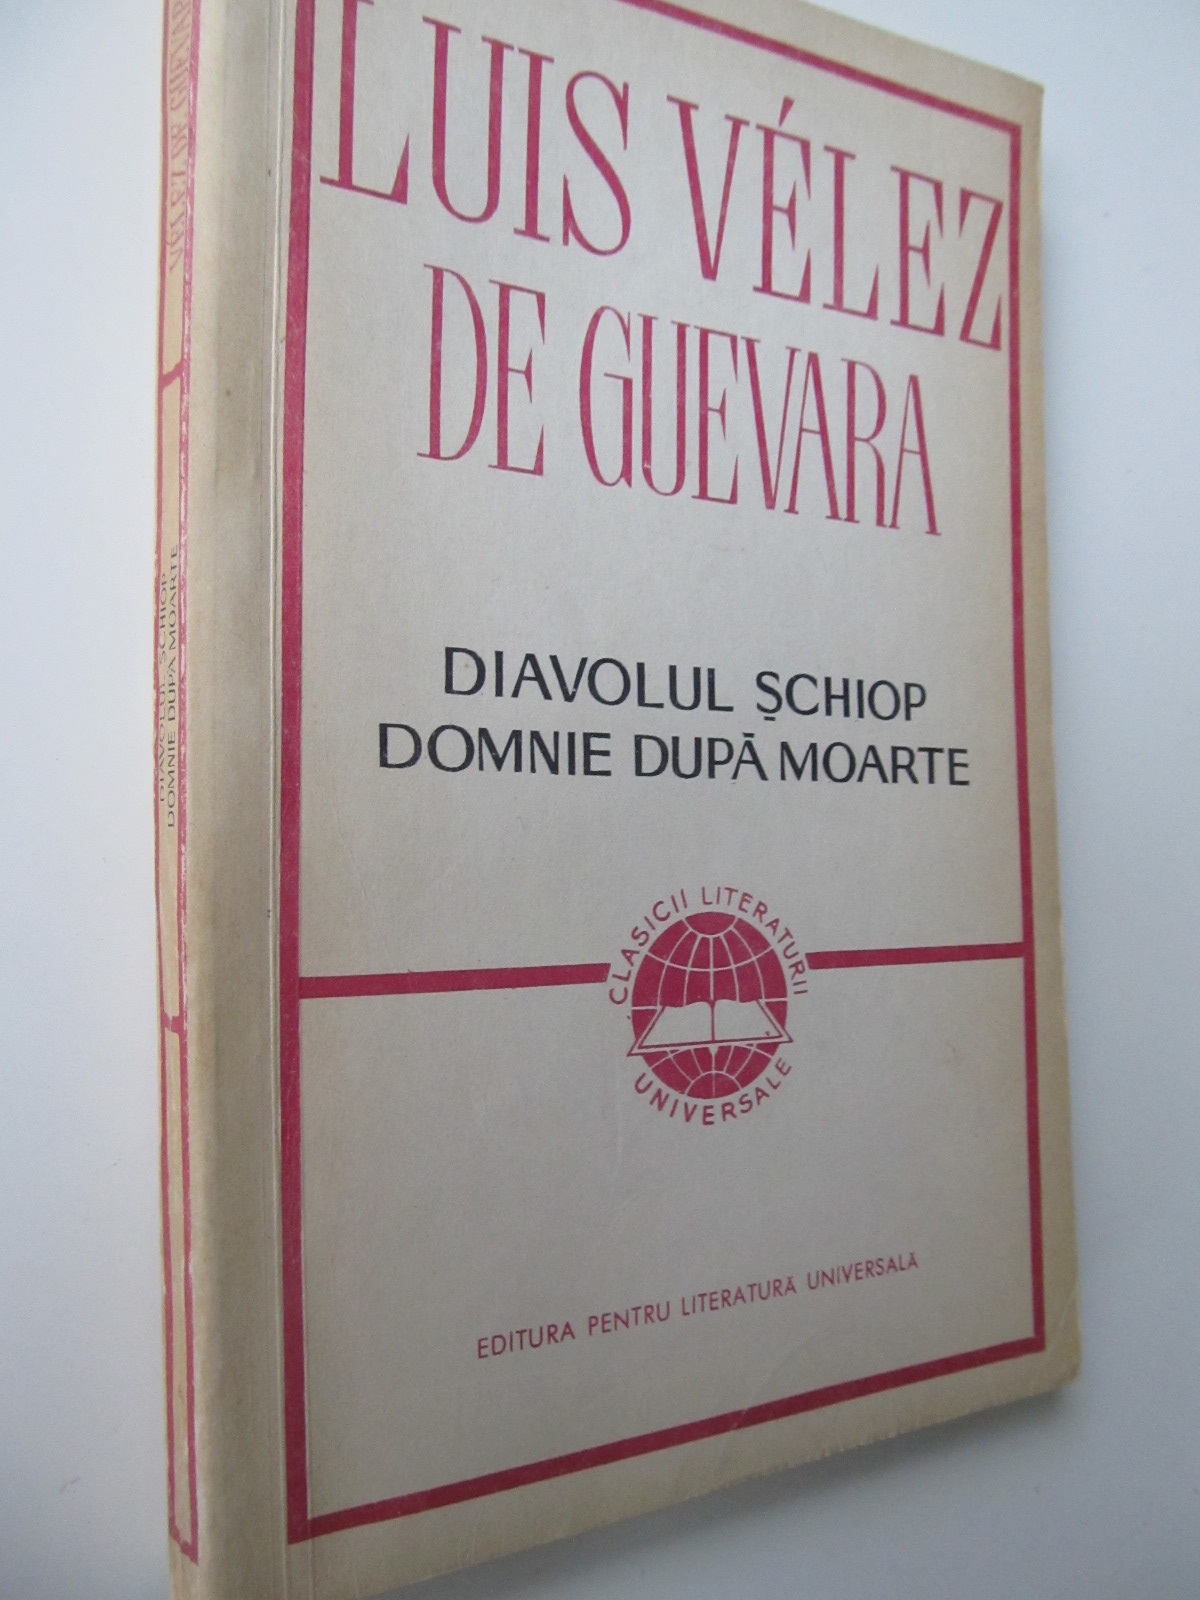 Diavolul schiop - Domnie dupa moarte - Luis Velez de Guevara | Detalii carte